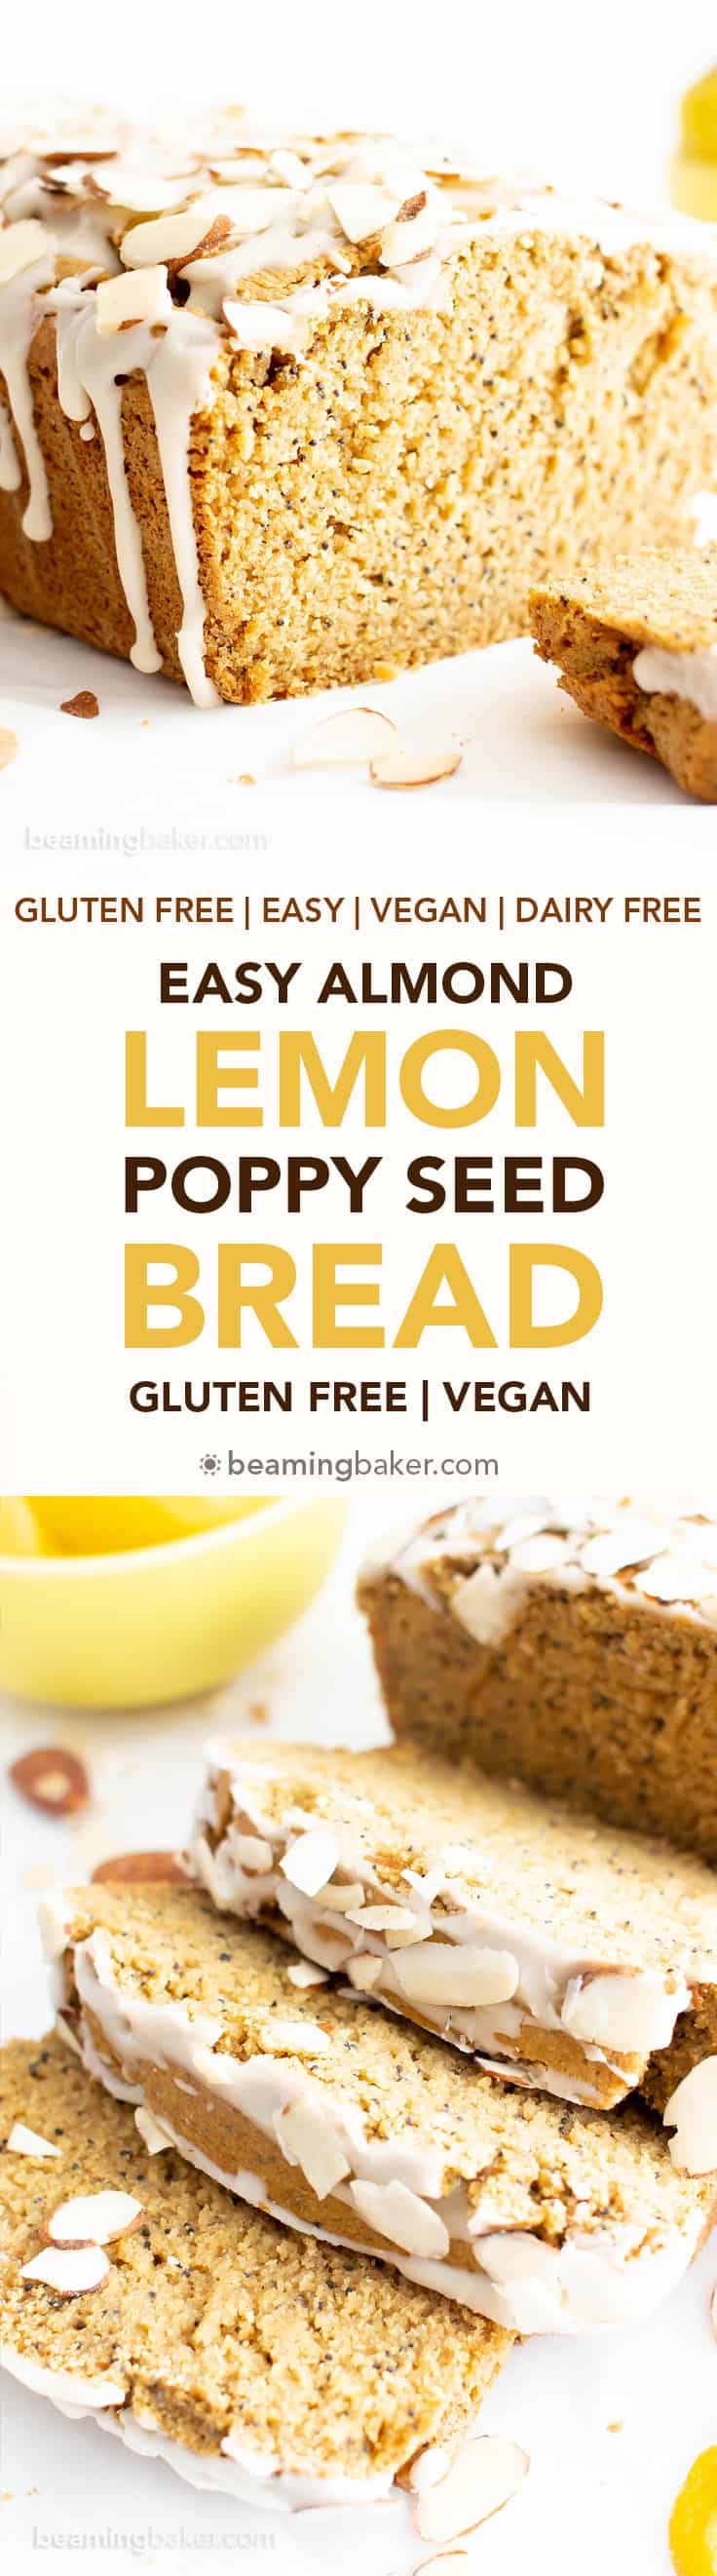 Easy Vegan Lemon Almond Poppy Seed Bread Recipe (Gluten-Free, Healthy): this easy gluten free lemon almond poppy seed bread recipe is moist, fluffy and bursting with lemon flavor! It’s the best vegan lemon poppy seed bread – gluten-free, dairy-free, healthy! #Vegan #GlutenFree #DairyFree #Lemon | Recipe at BeamingBaker.com